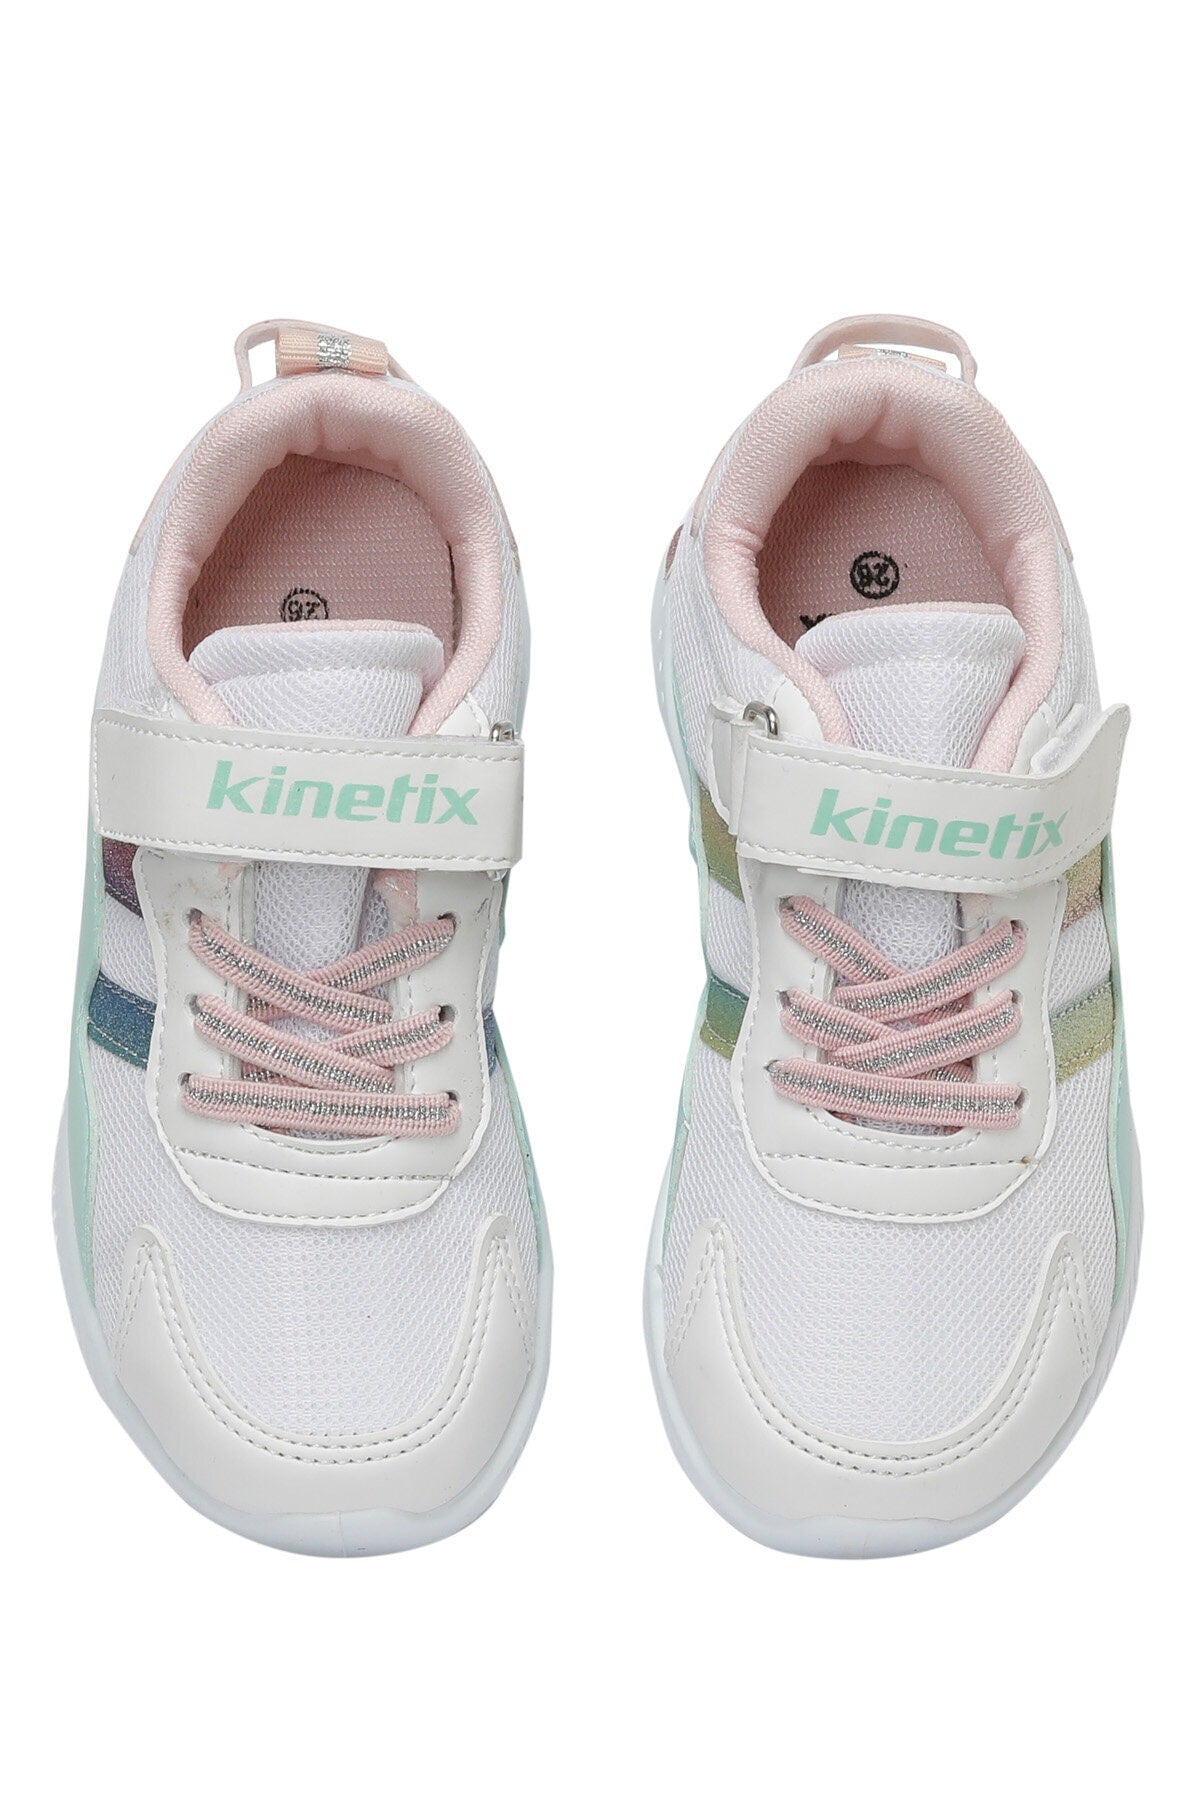 Dena Tx 3fx White Girls' Sneakers